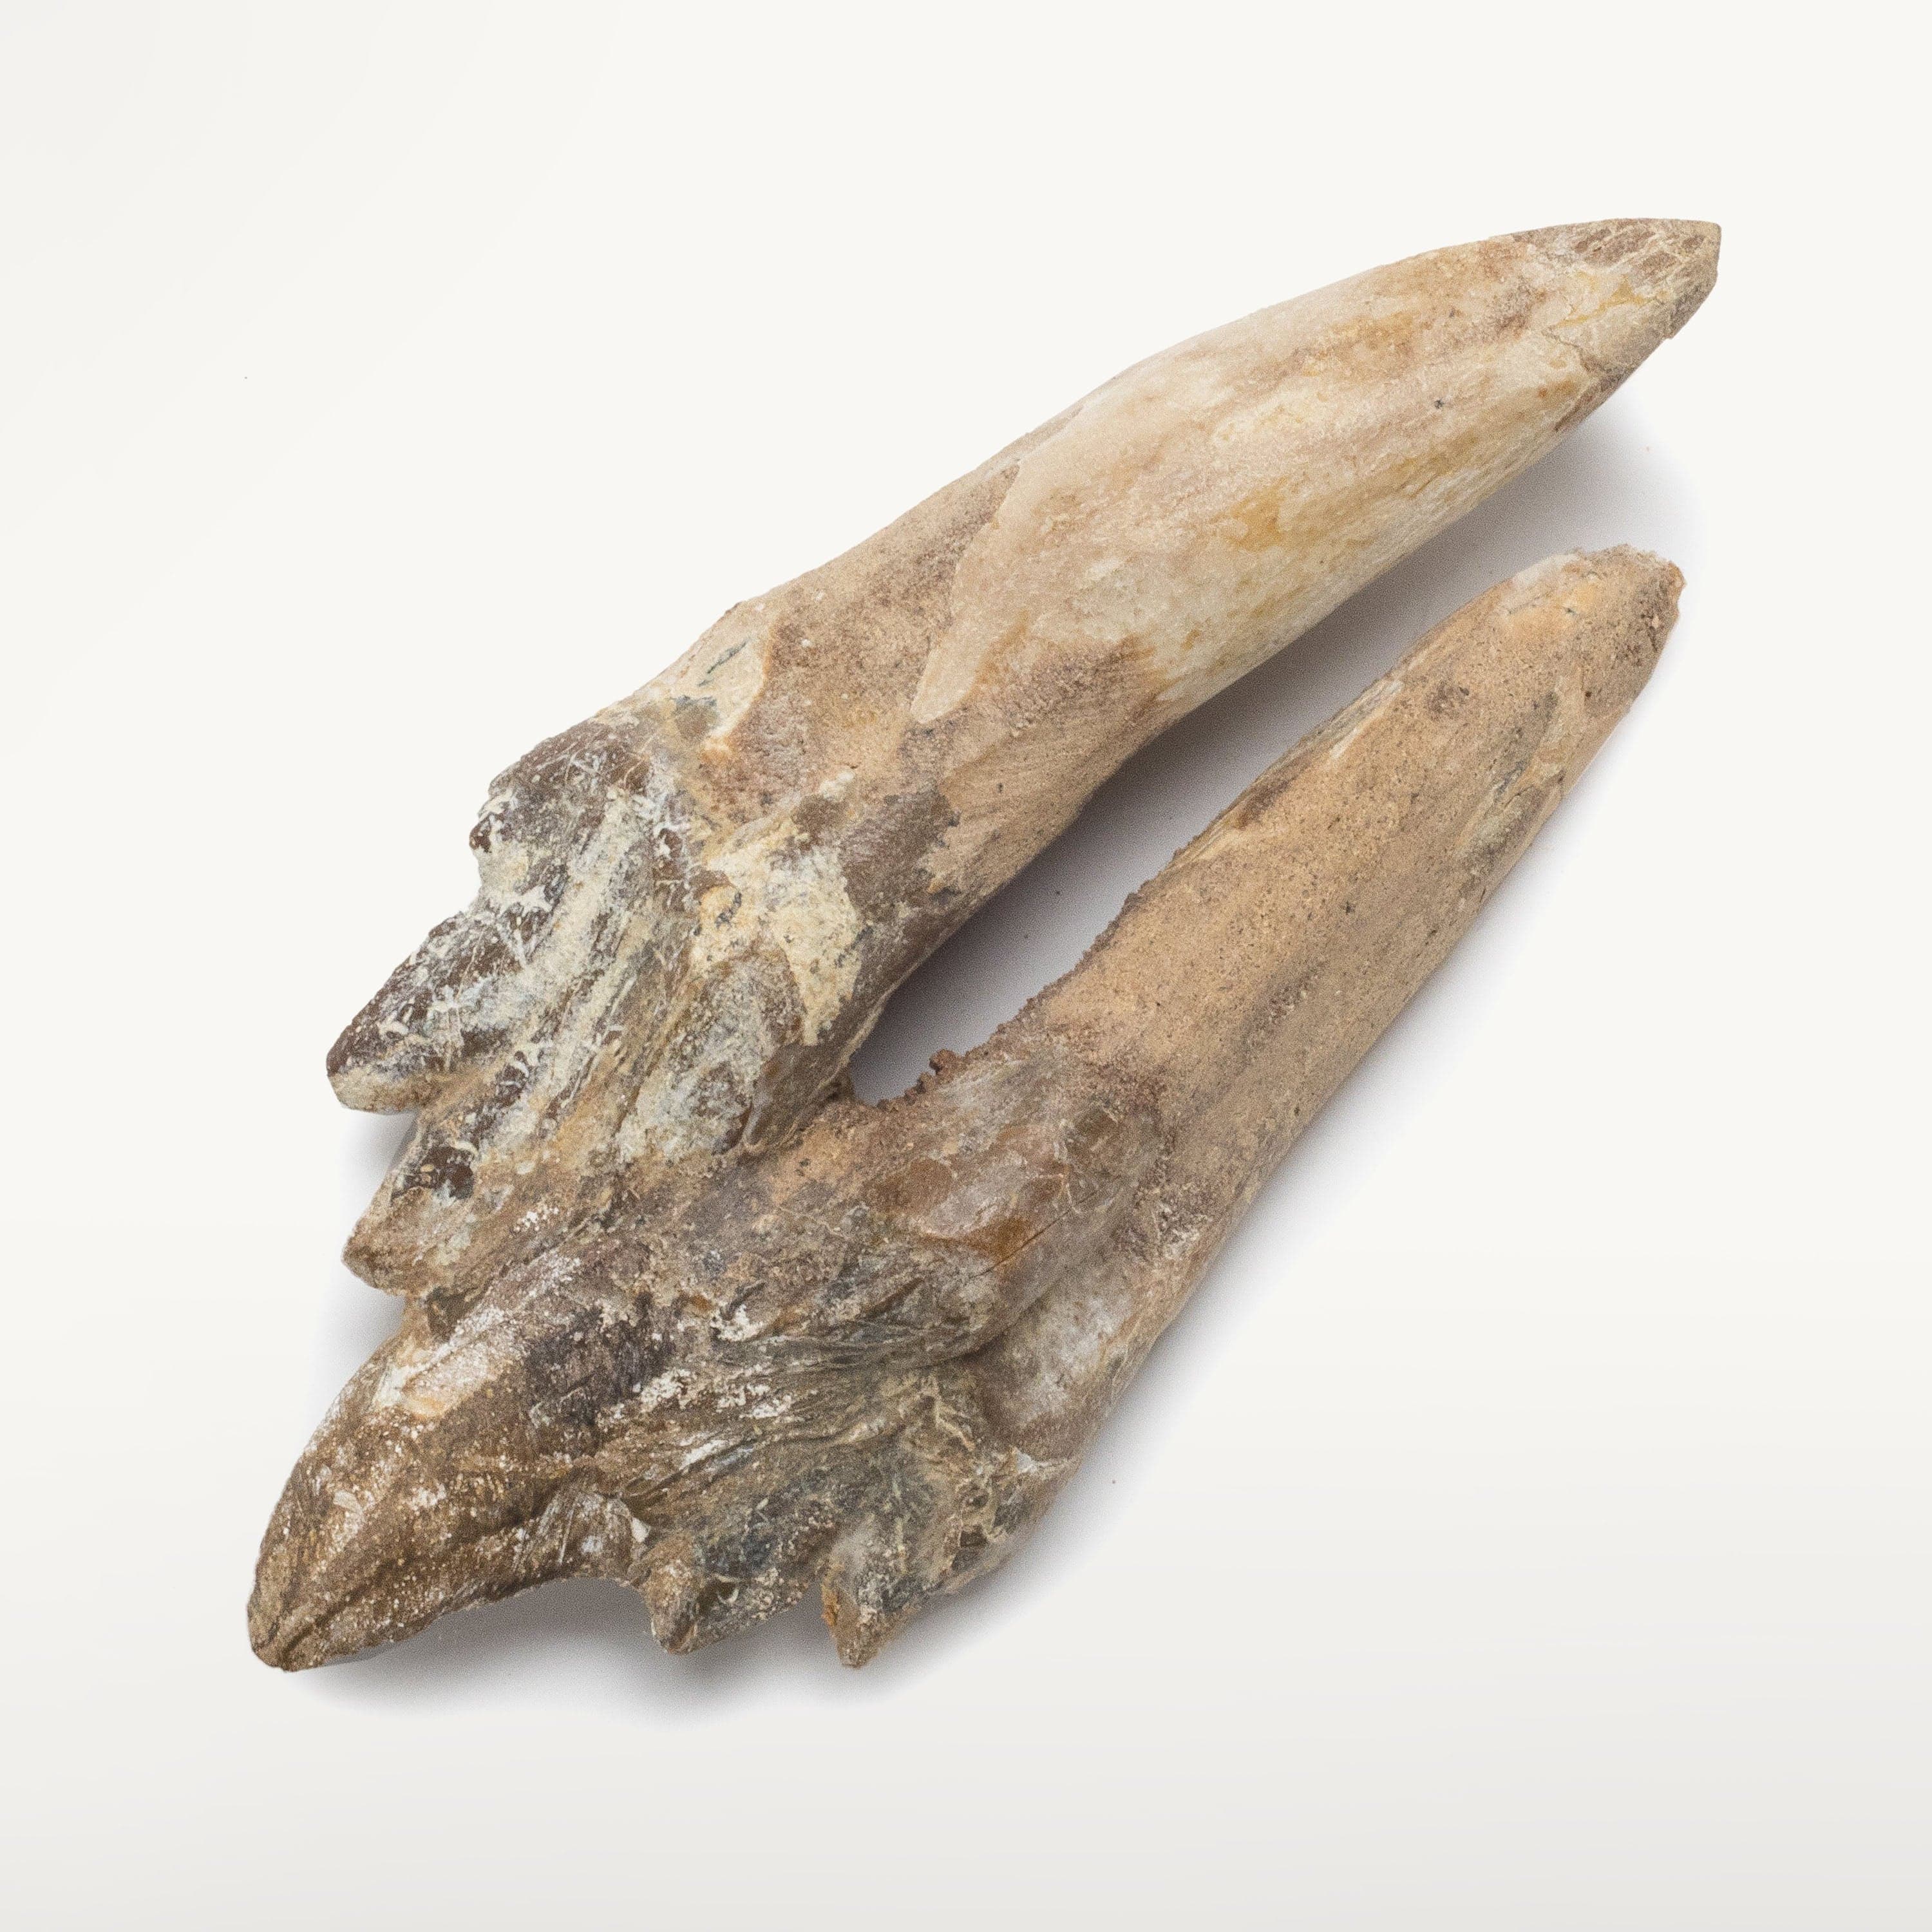 Kalifano Basilosaurus Teeth Natural Prehistoric Basilosaurus Whale Tooth from Morocco  - 3.4 in BST900.002